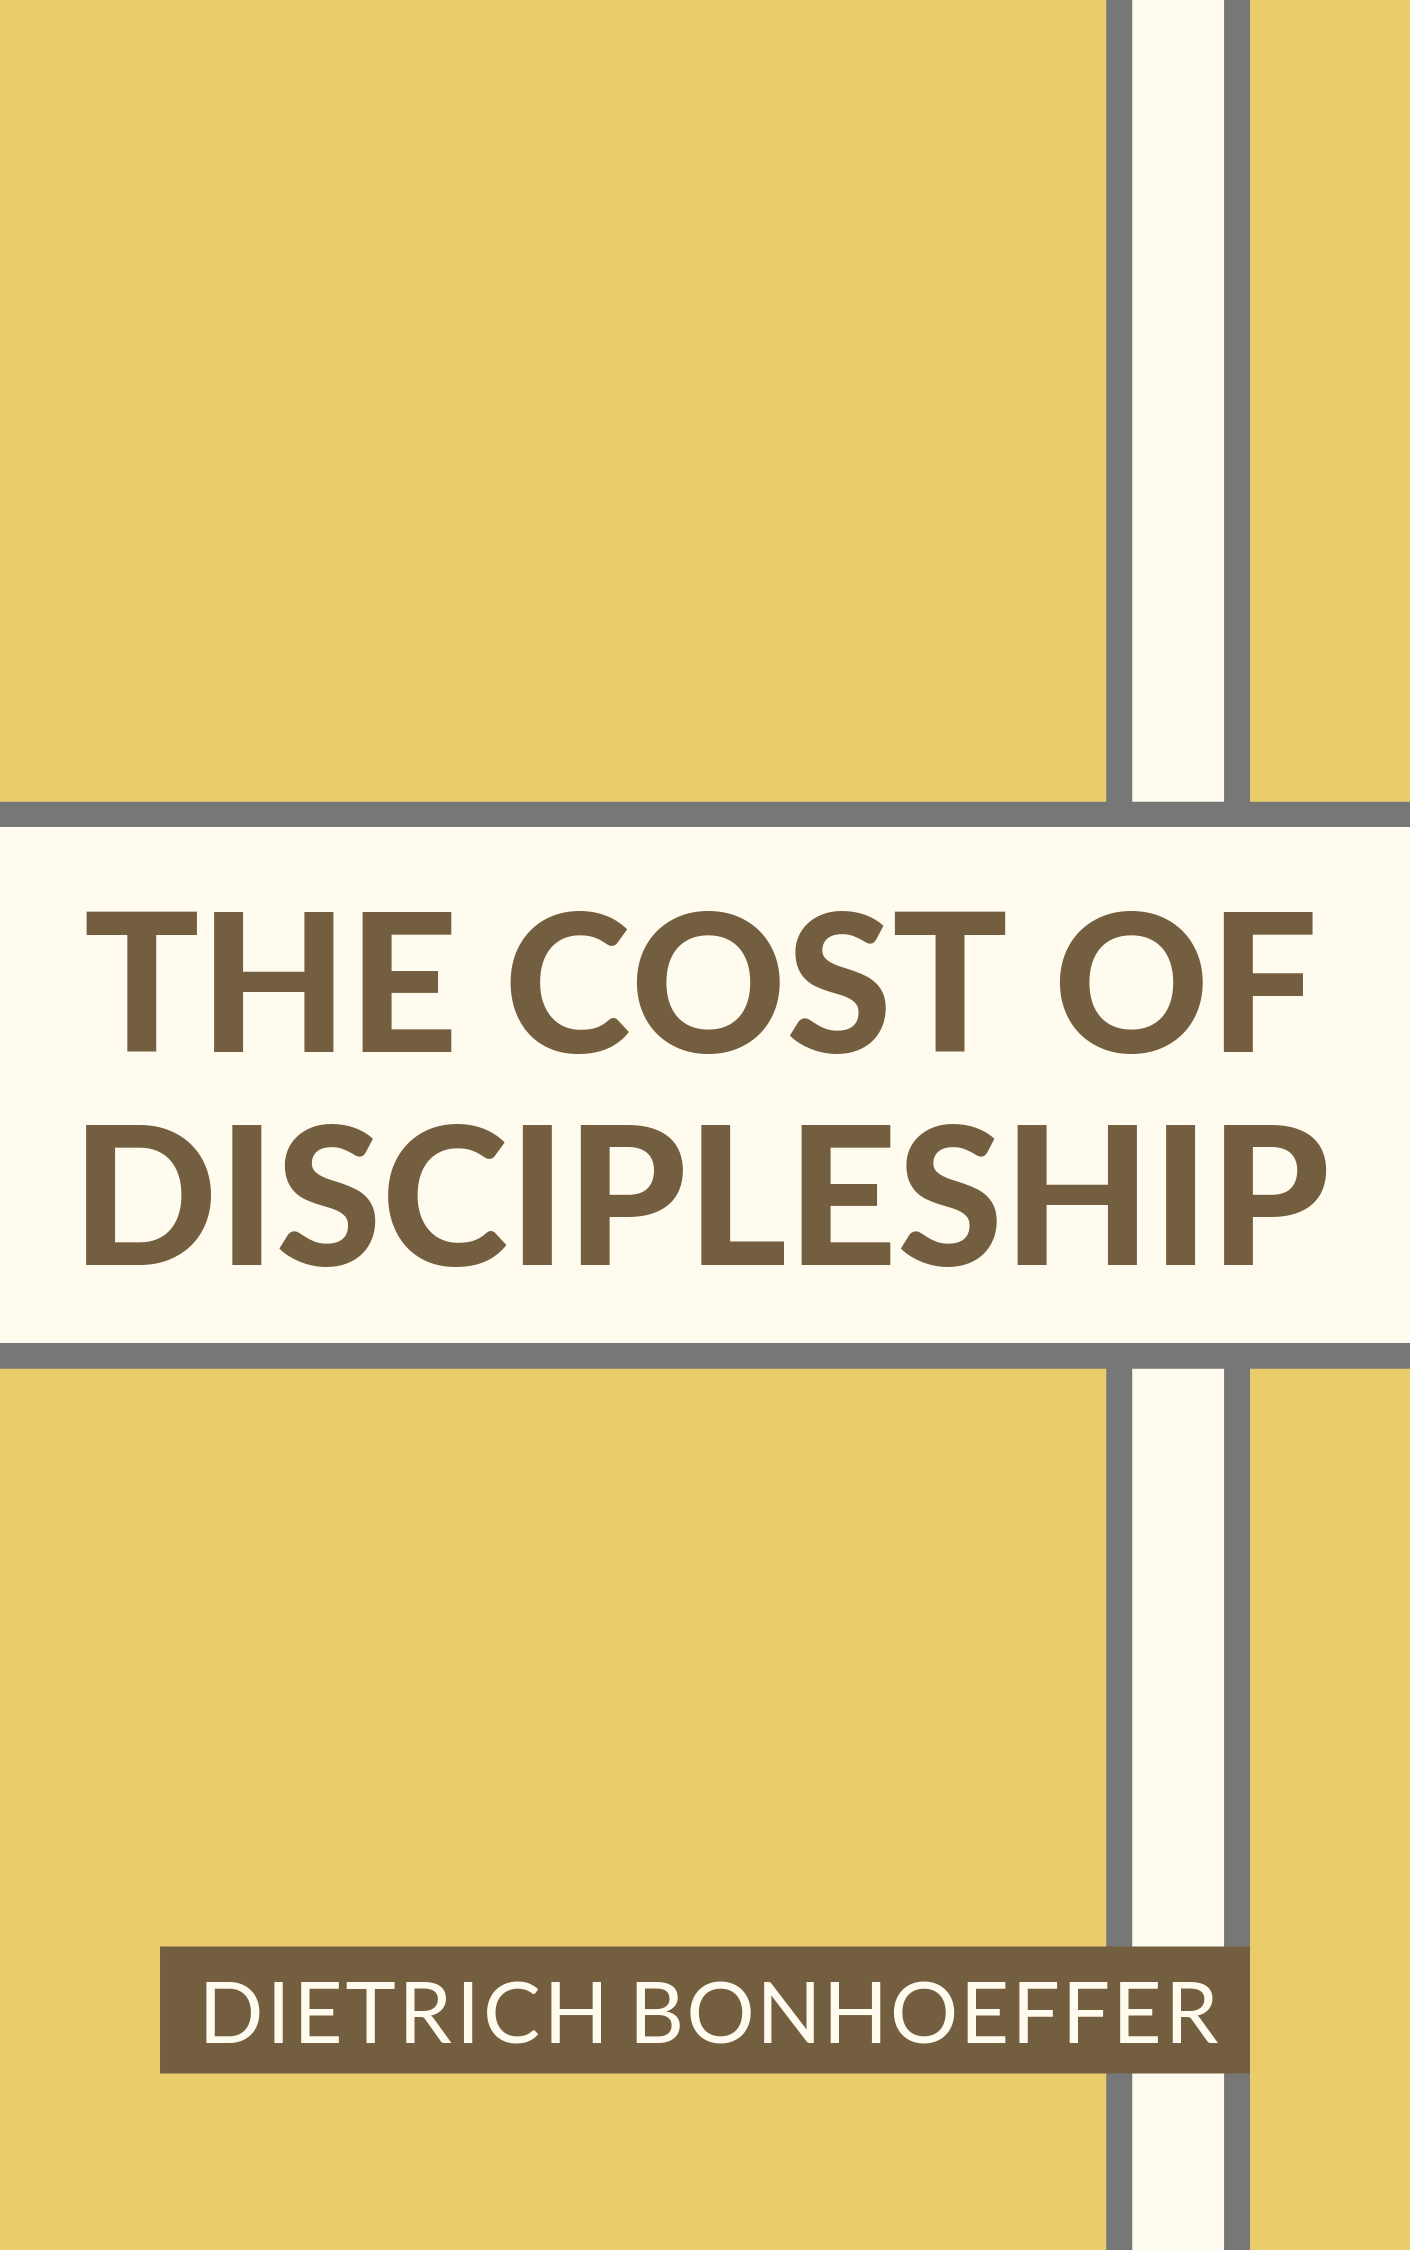 dietrich bonhoeffer book the cost of discipleship